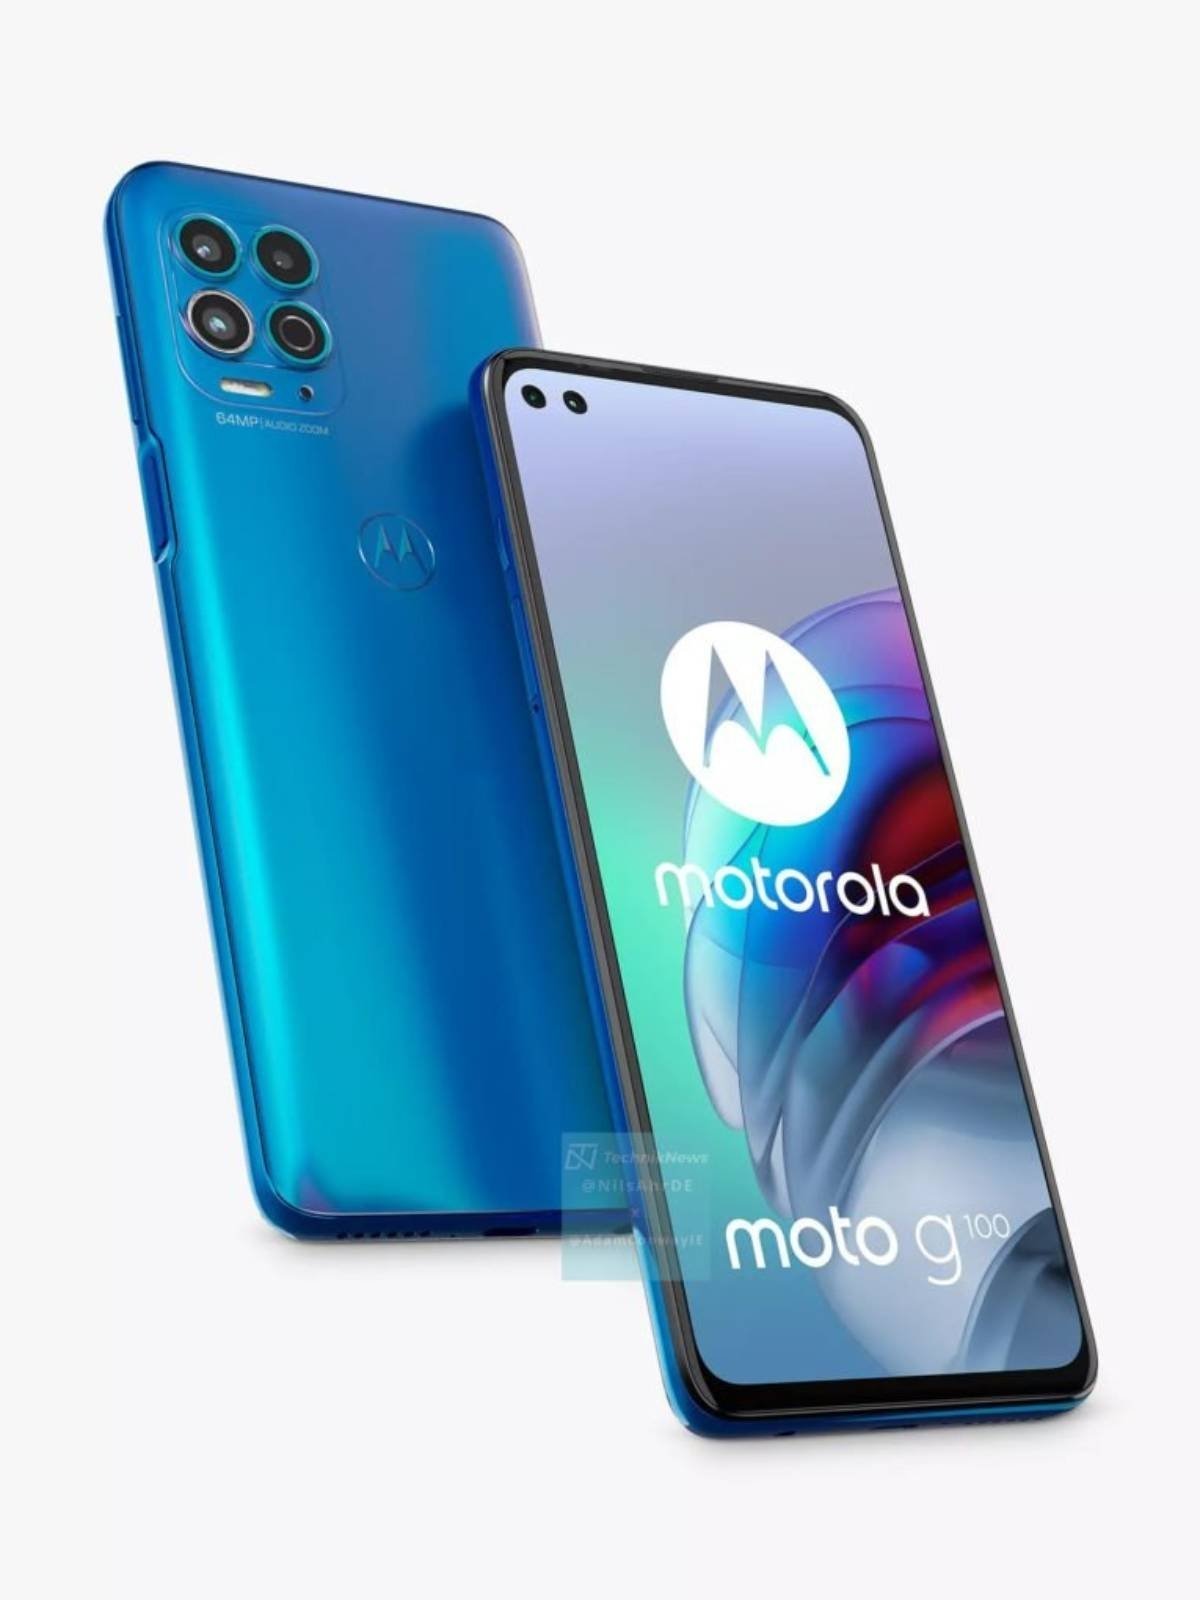 The Motorola Moto G100 uncovered